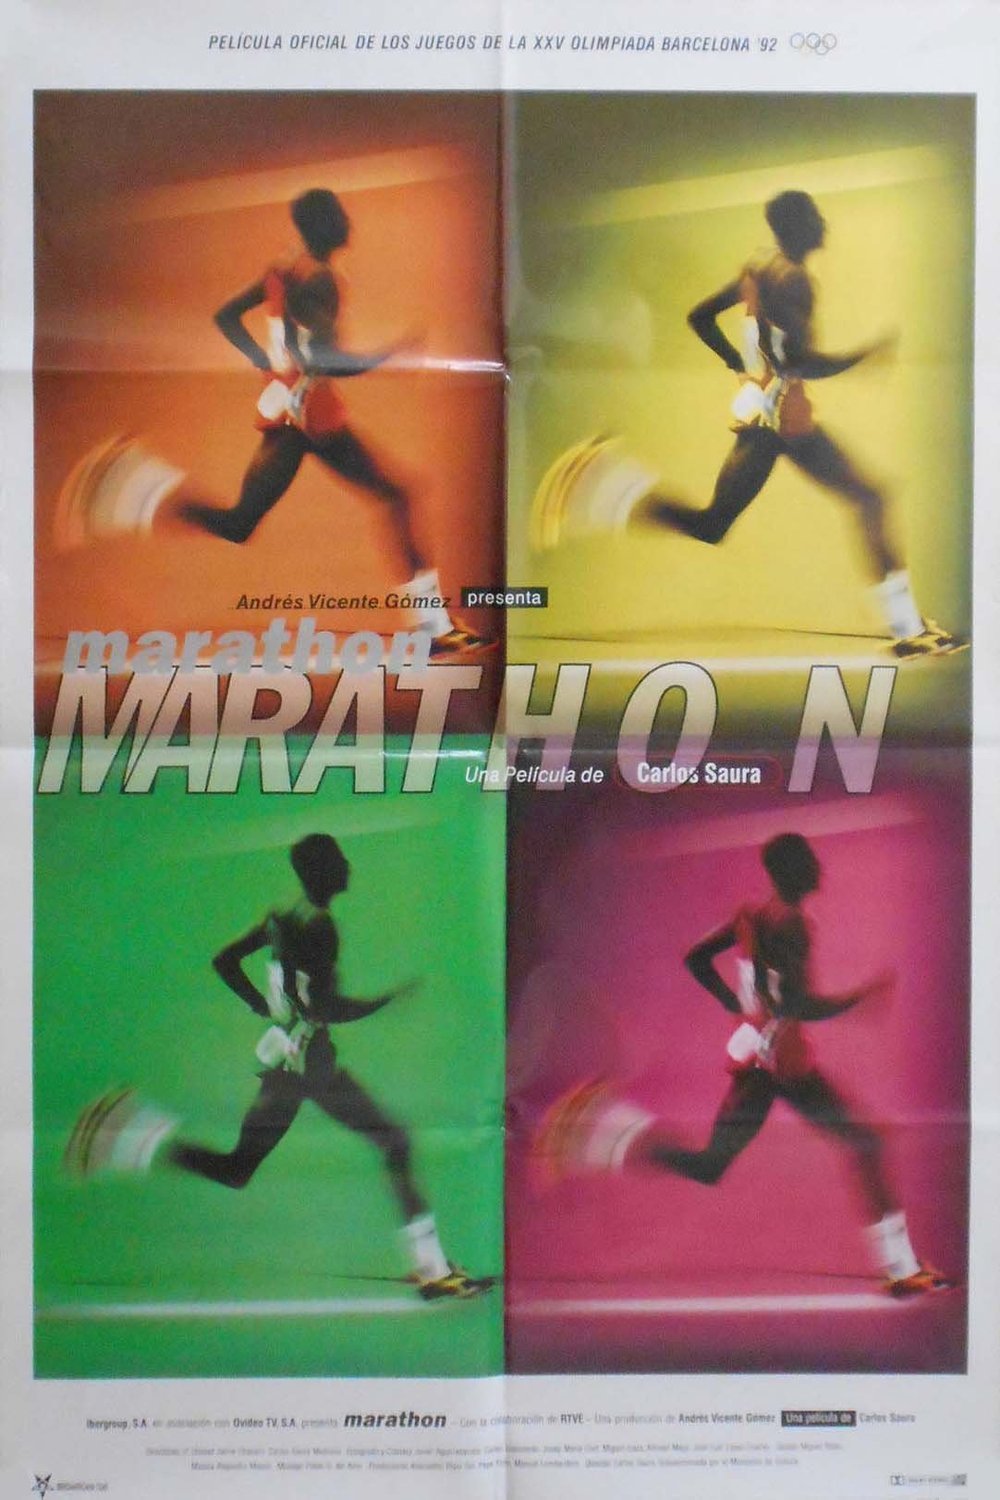 Spanish poster of the movie Marathon